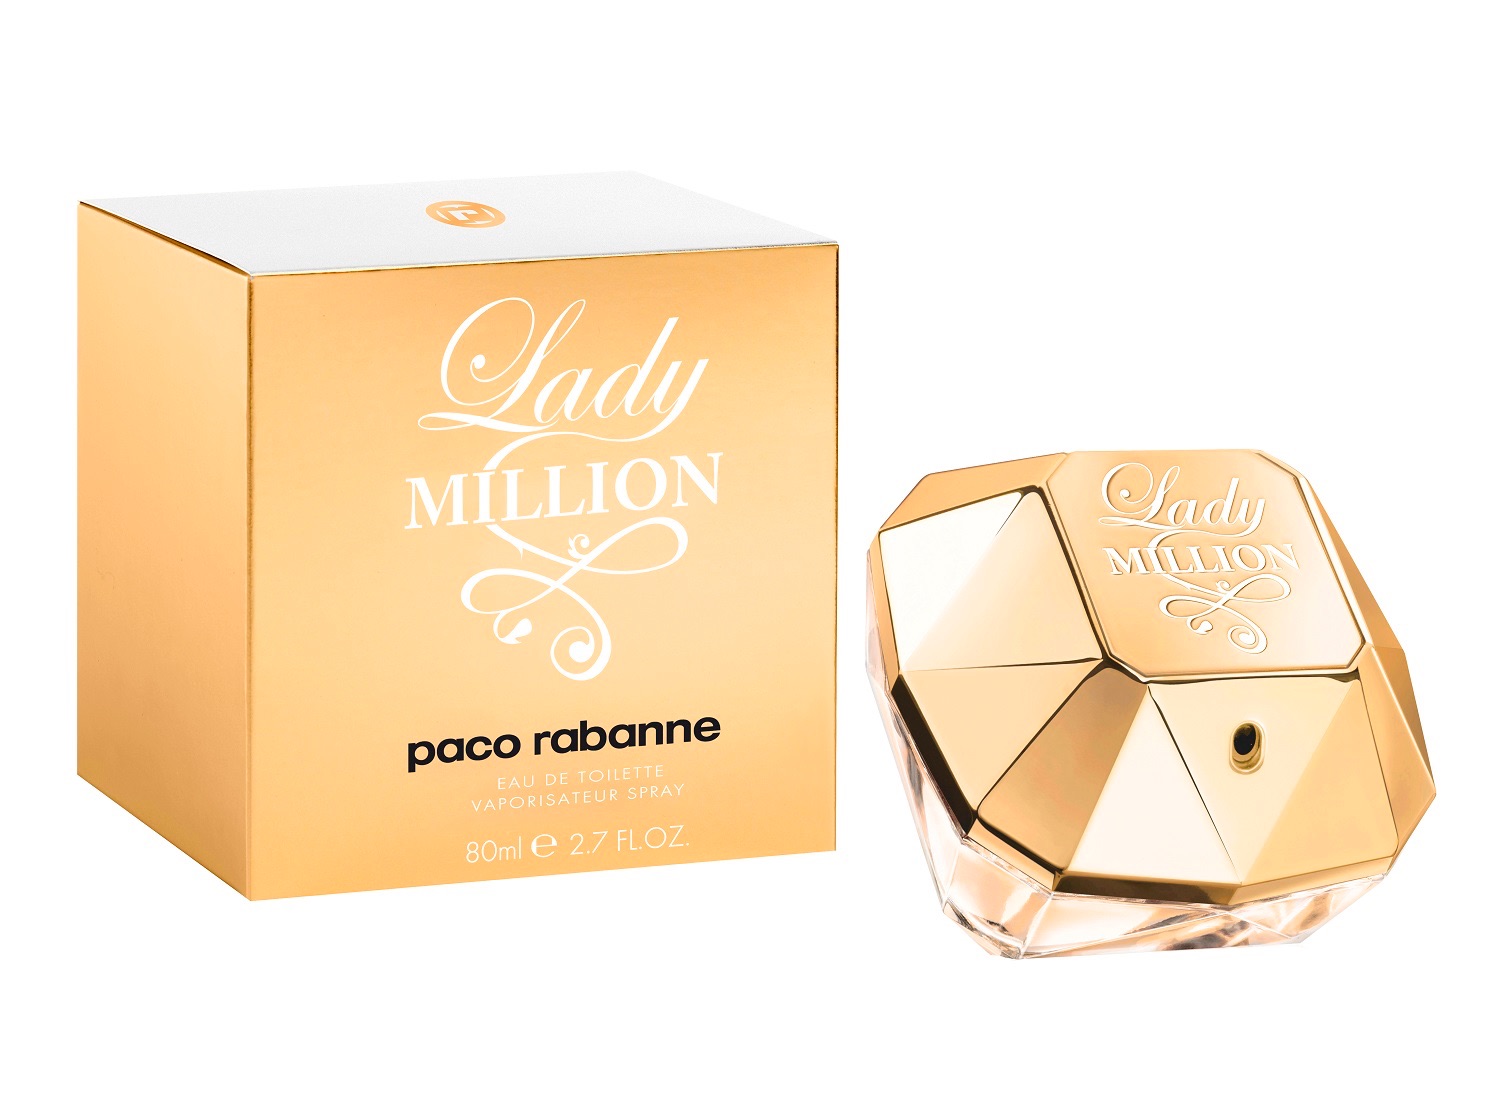 Paco Rabanne Lady Million Eau De Toilette 80ml - thefragrancecounter.co.uk